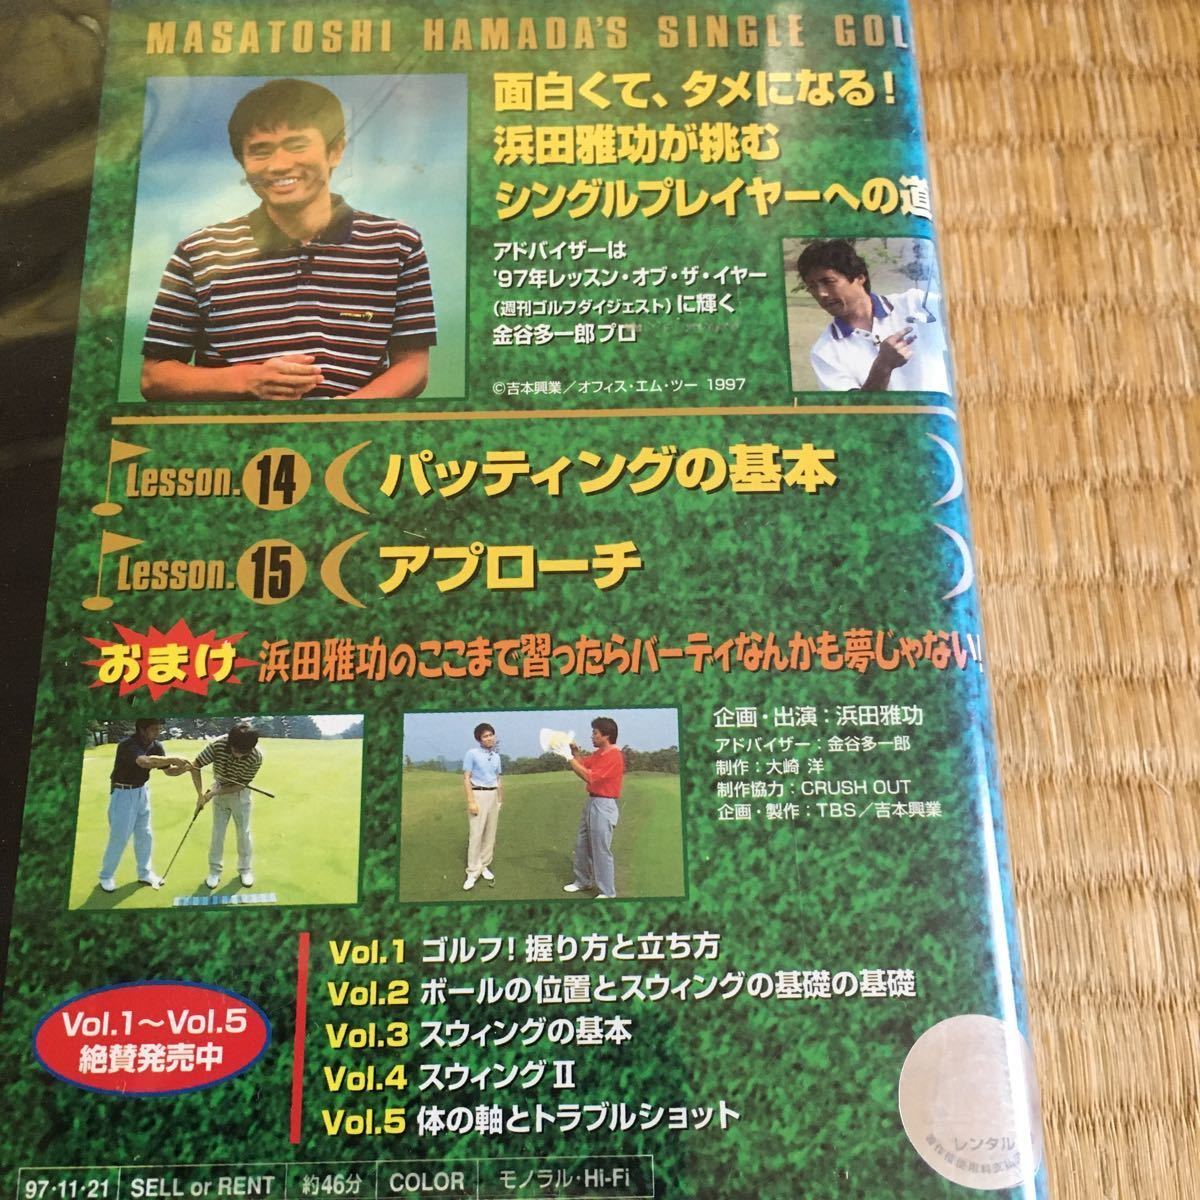  Golf video super sinia Golf,. rice field ... single GOLF,.. therefore. Golf rental 